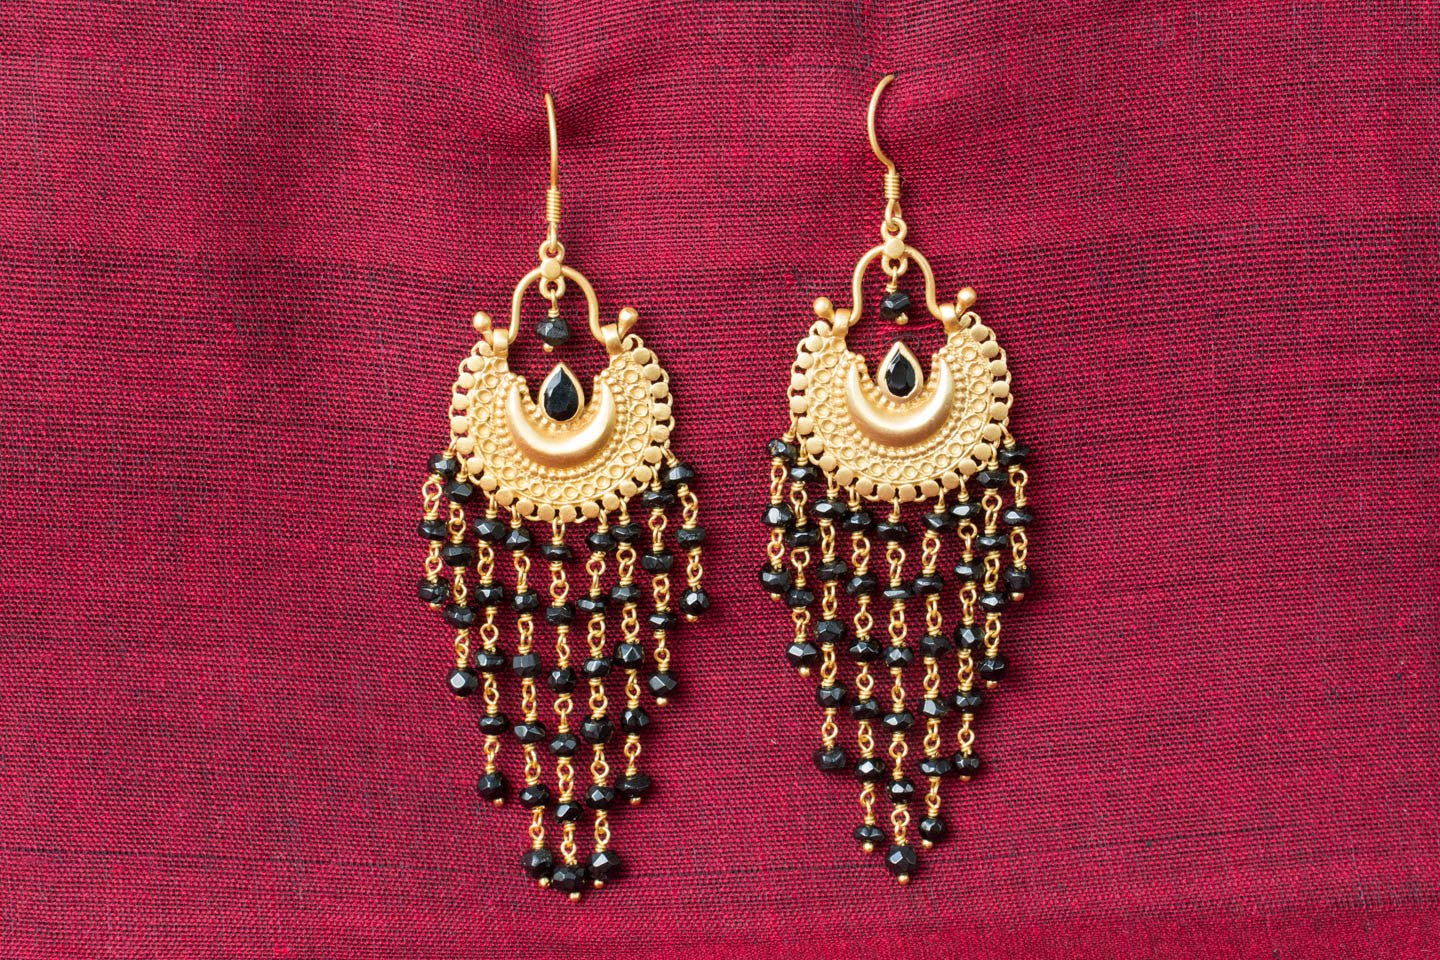 20a466-silver-gold-plated-amrapali-earrings-black-onyx-drop-bead